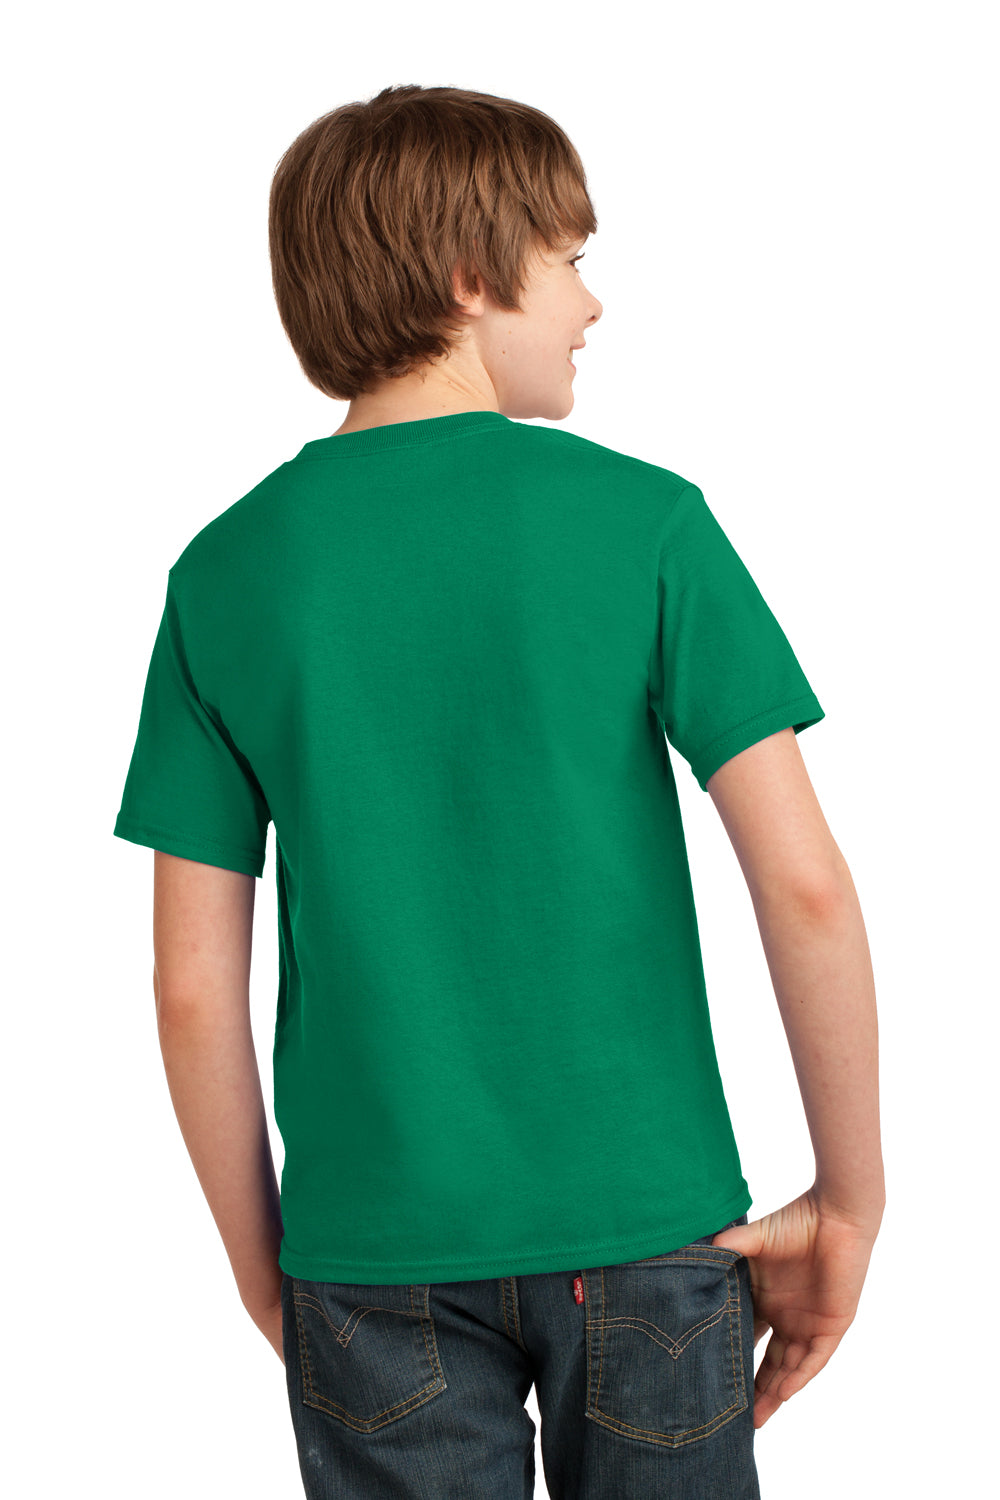 Port & Company PC61Y Youth Essential Short Sleeve Crewneck T-Shirt Kelly Green Back